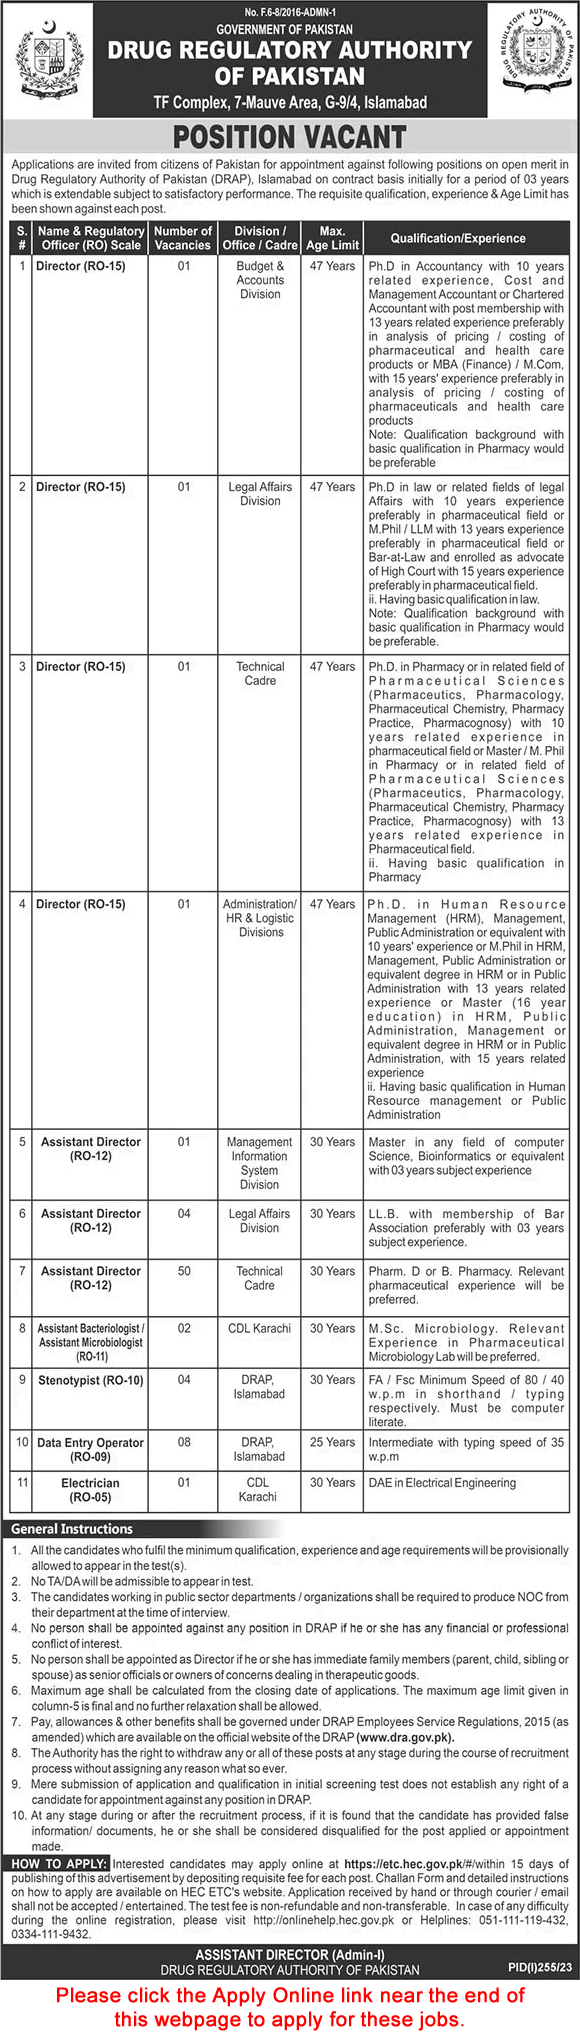 Drug Regulatory Authority of Pakistan Jobs 2023 July Apply Online DRAP Assistant Directors & Others Latest